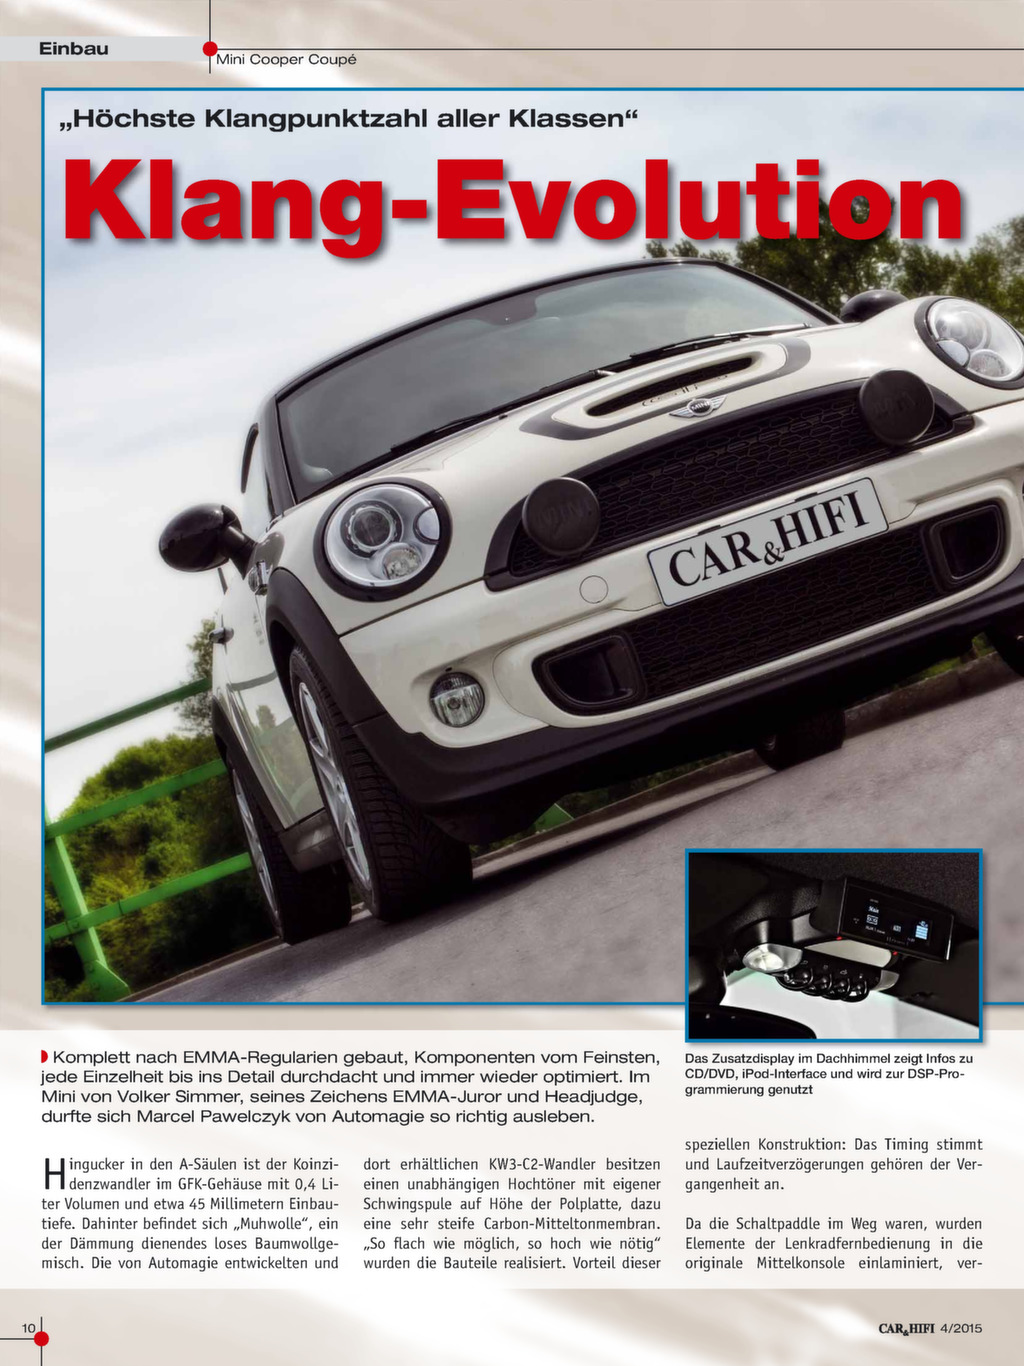 Car & Hifi - Klang-Evolution